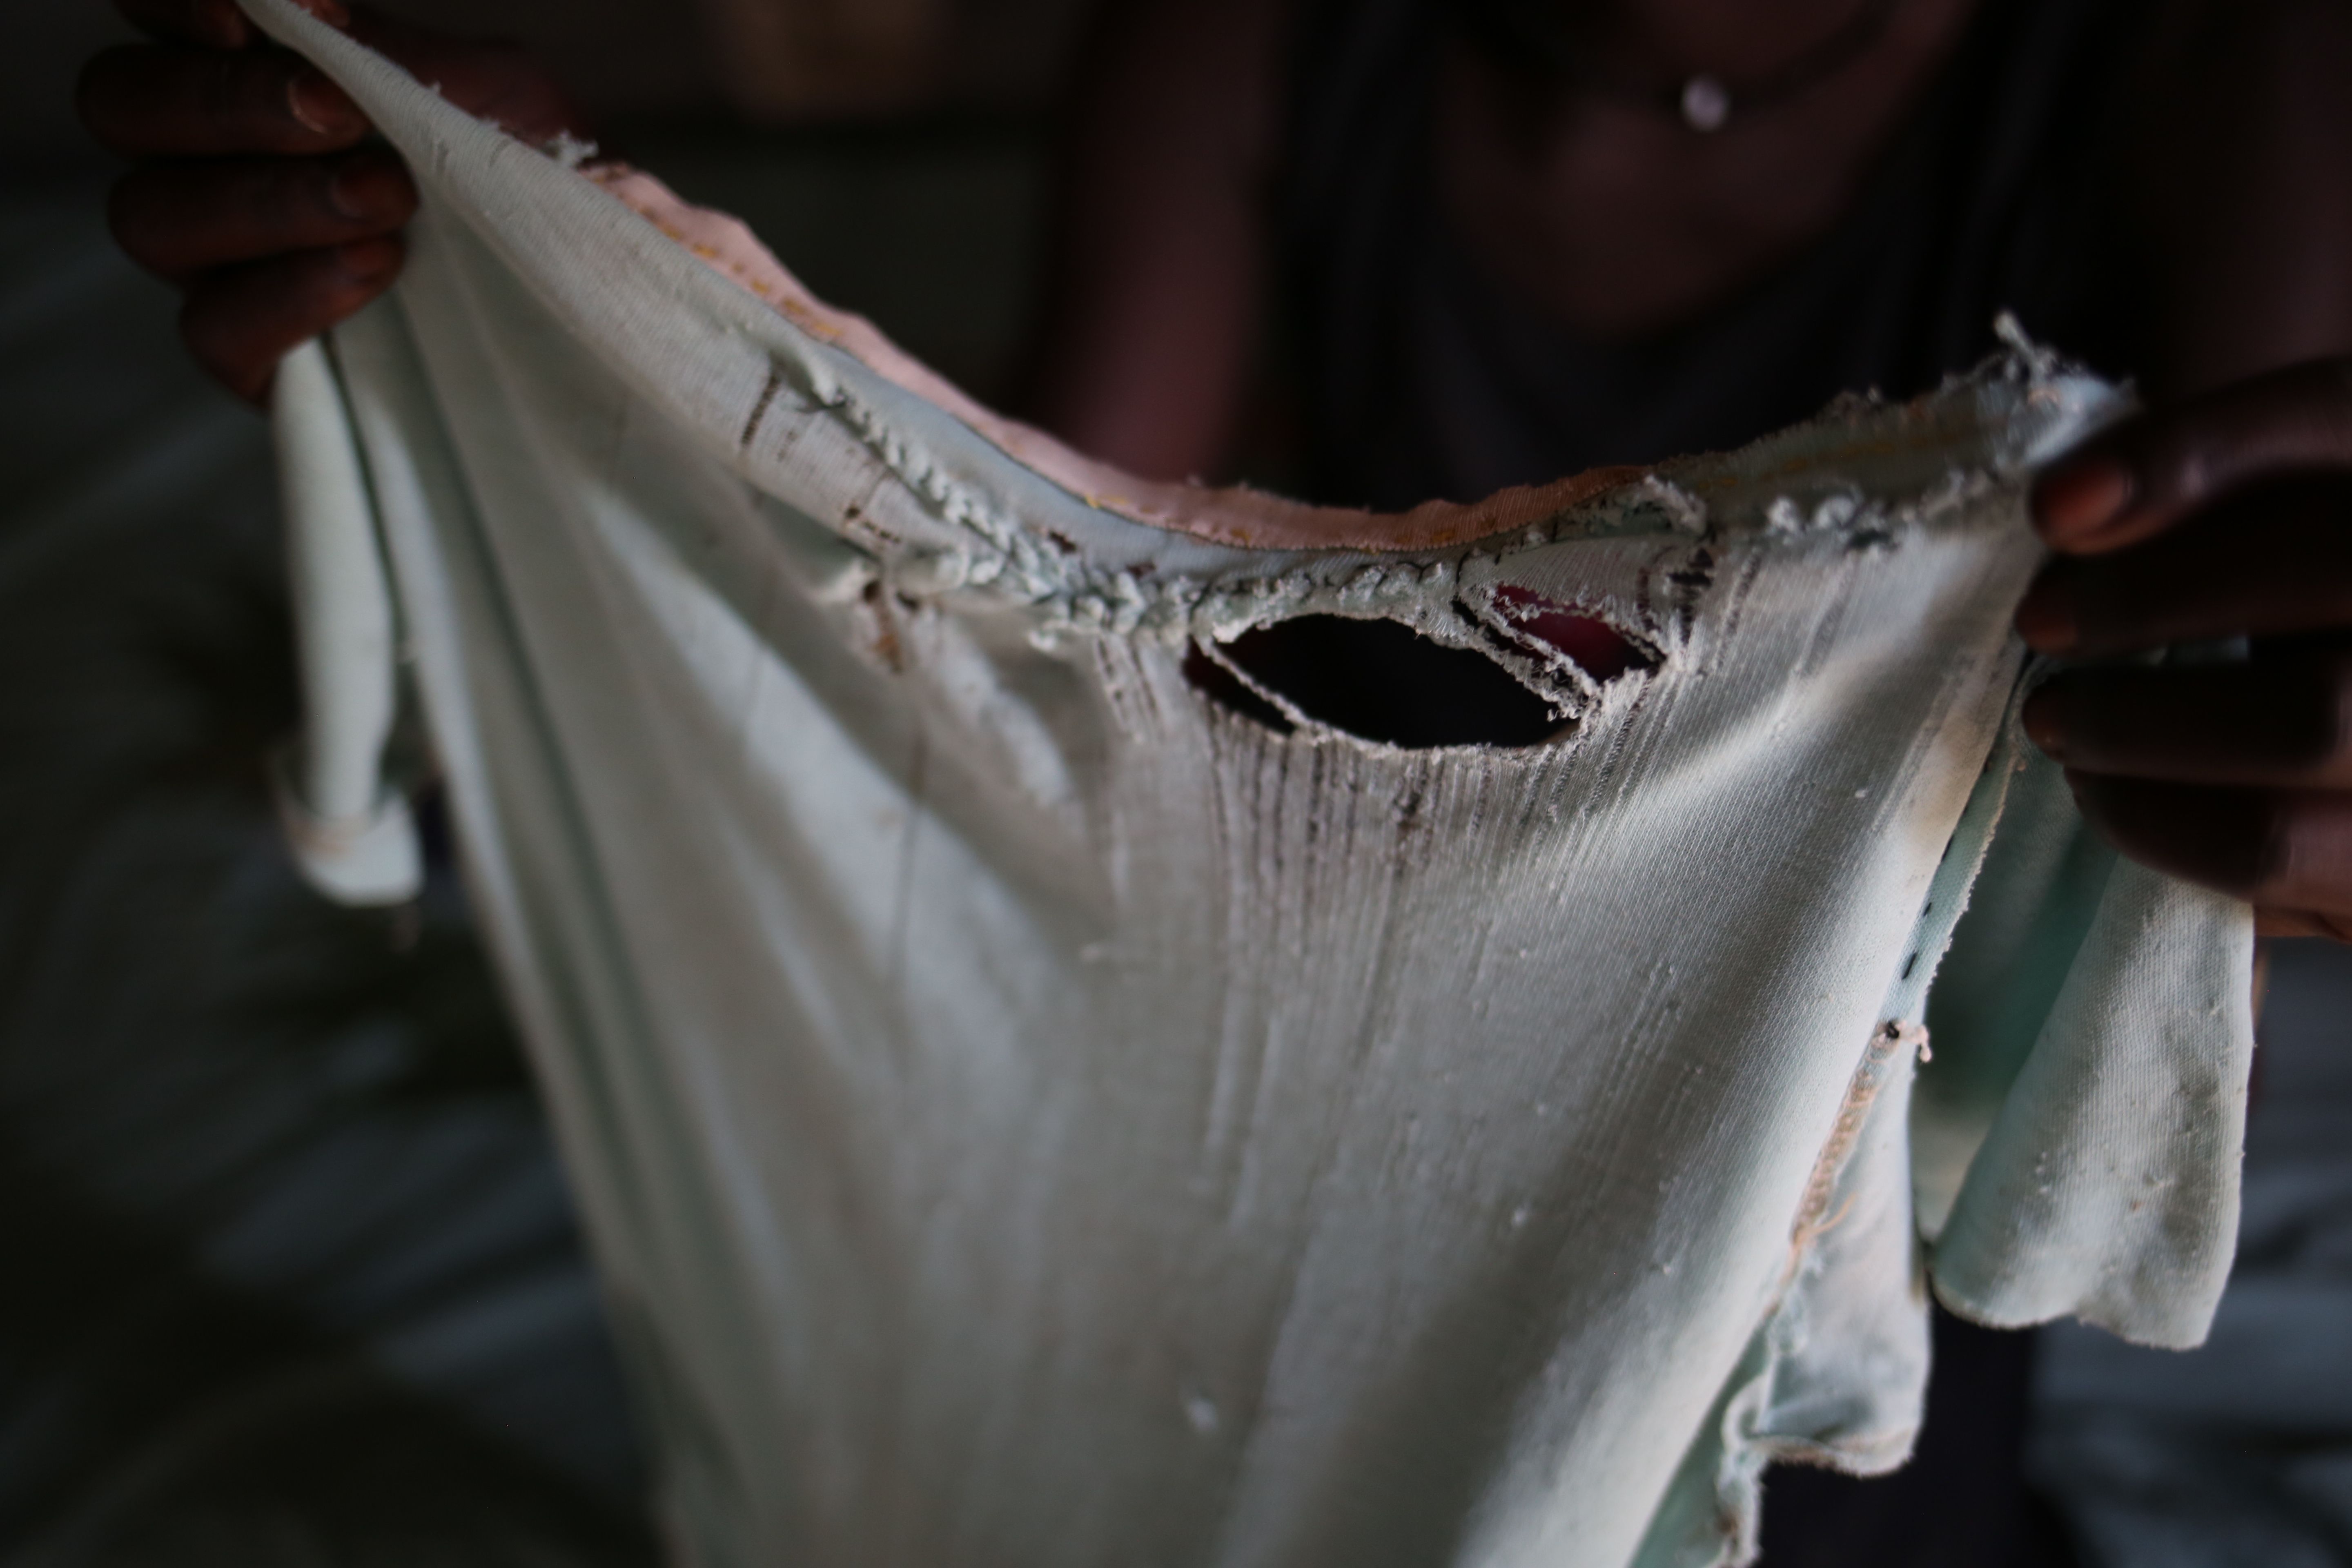 In South Sudan's civil war, rape is wielded as a weapon. Despite dangerous stigma, some women are speaking out. Image by Cassandra Vinograd. South Sudan, 2017.